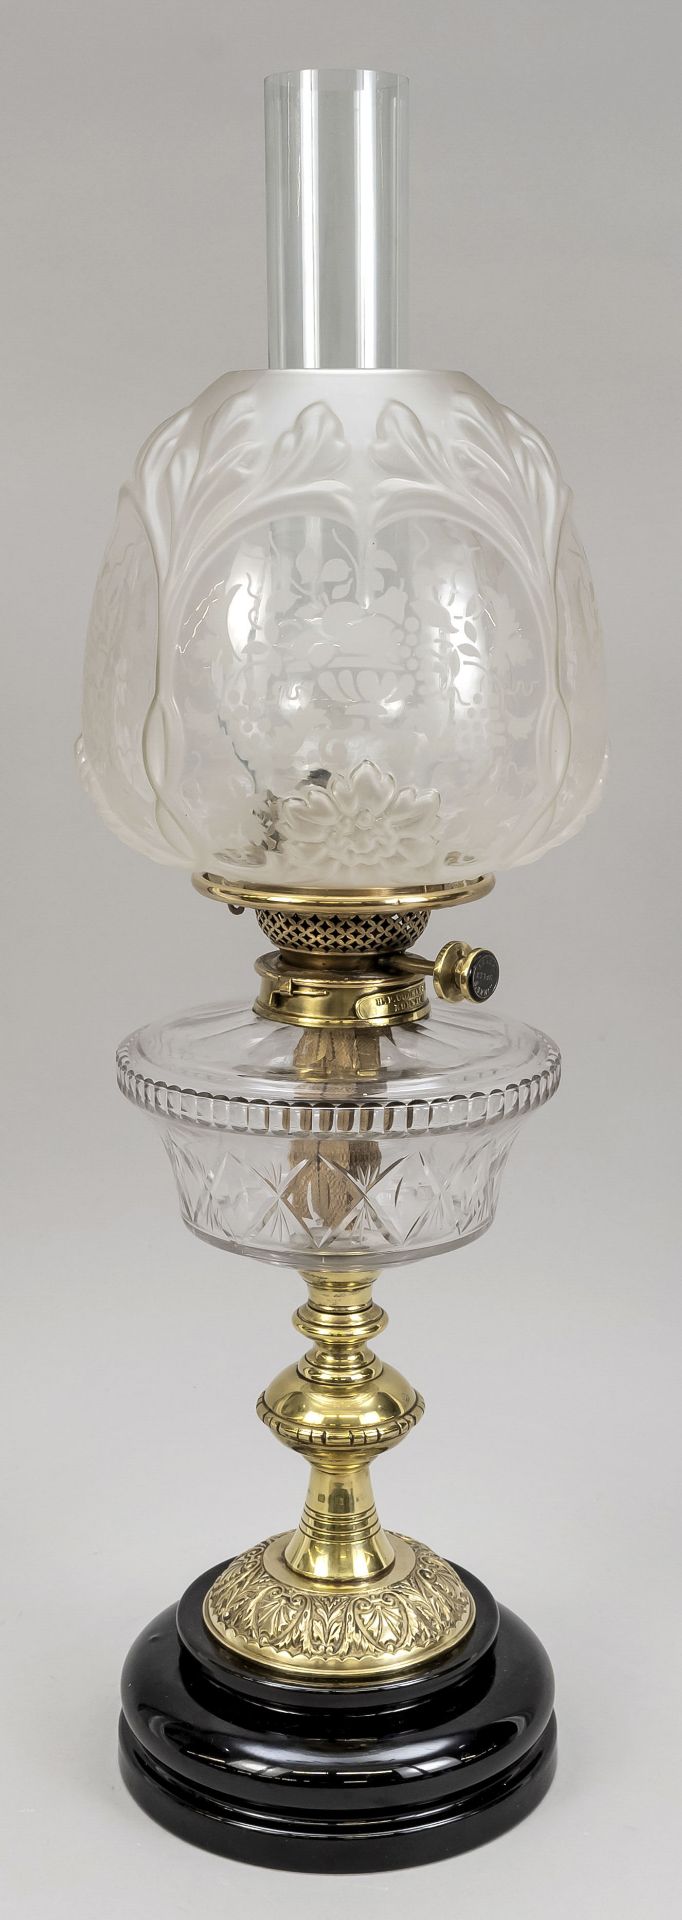 Petroleum lamp, 19th/20th c., black glazed ceramic base, balustrated brass stem, glass tank with cut